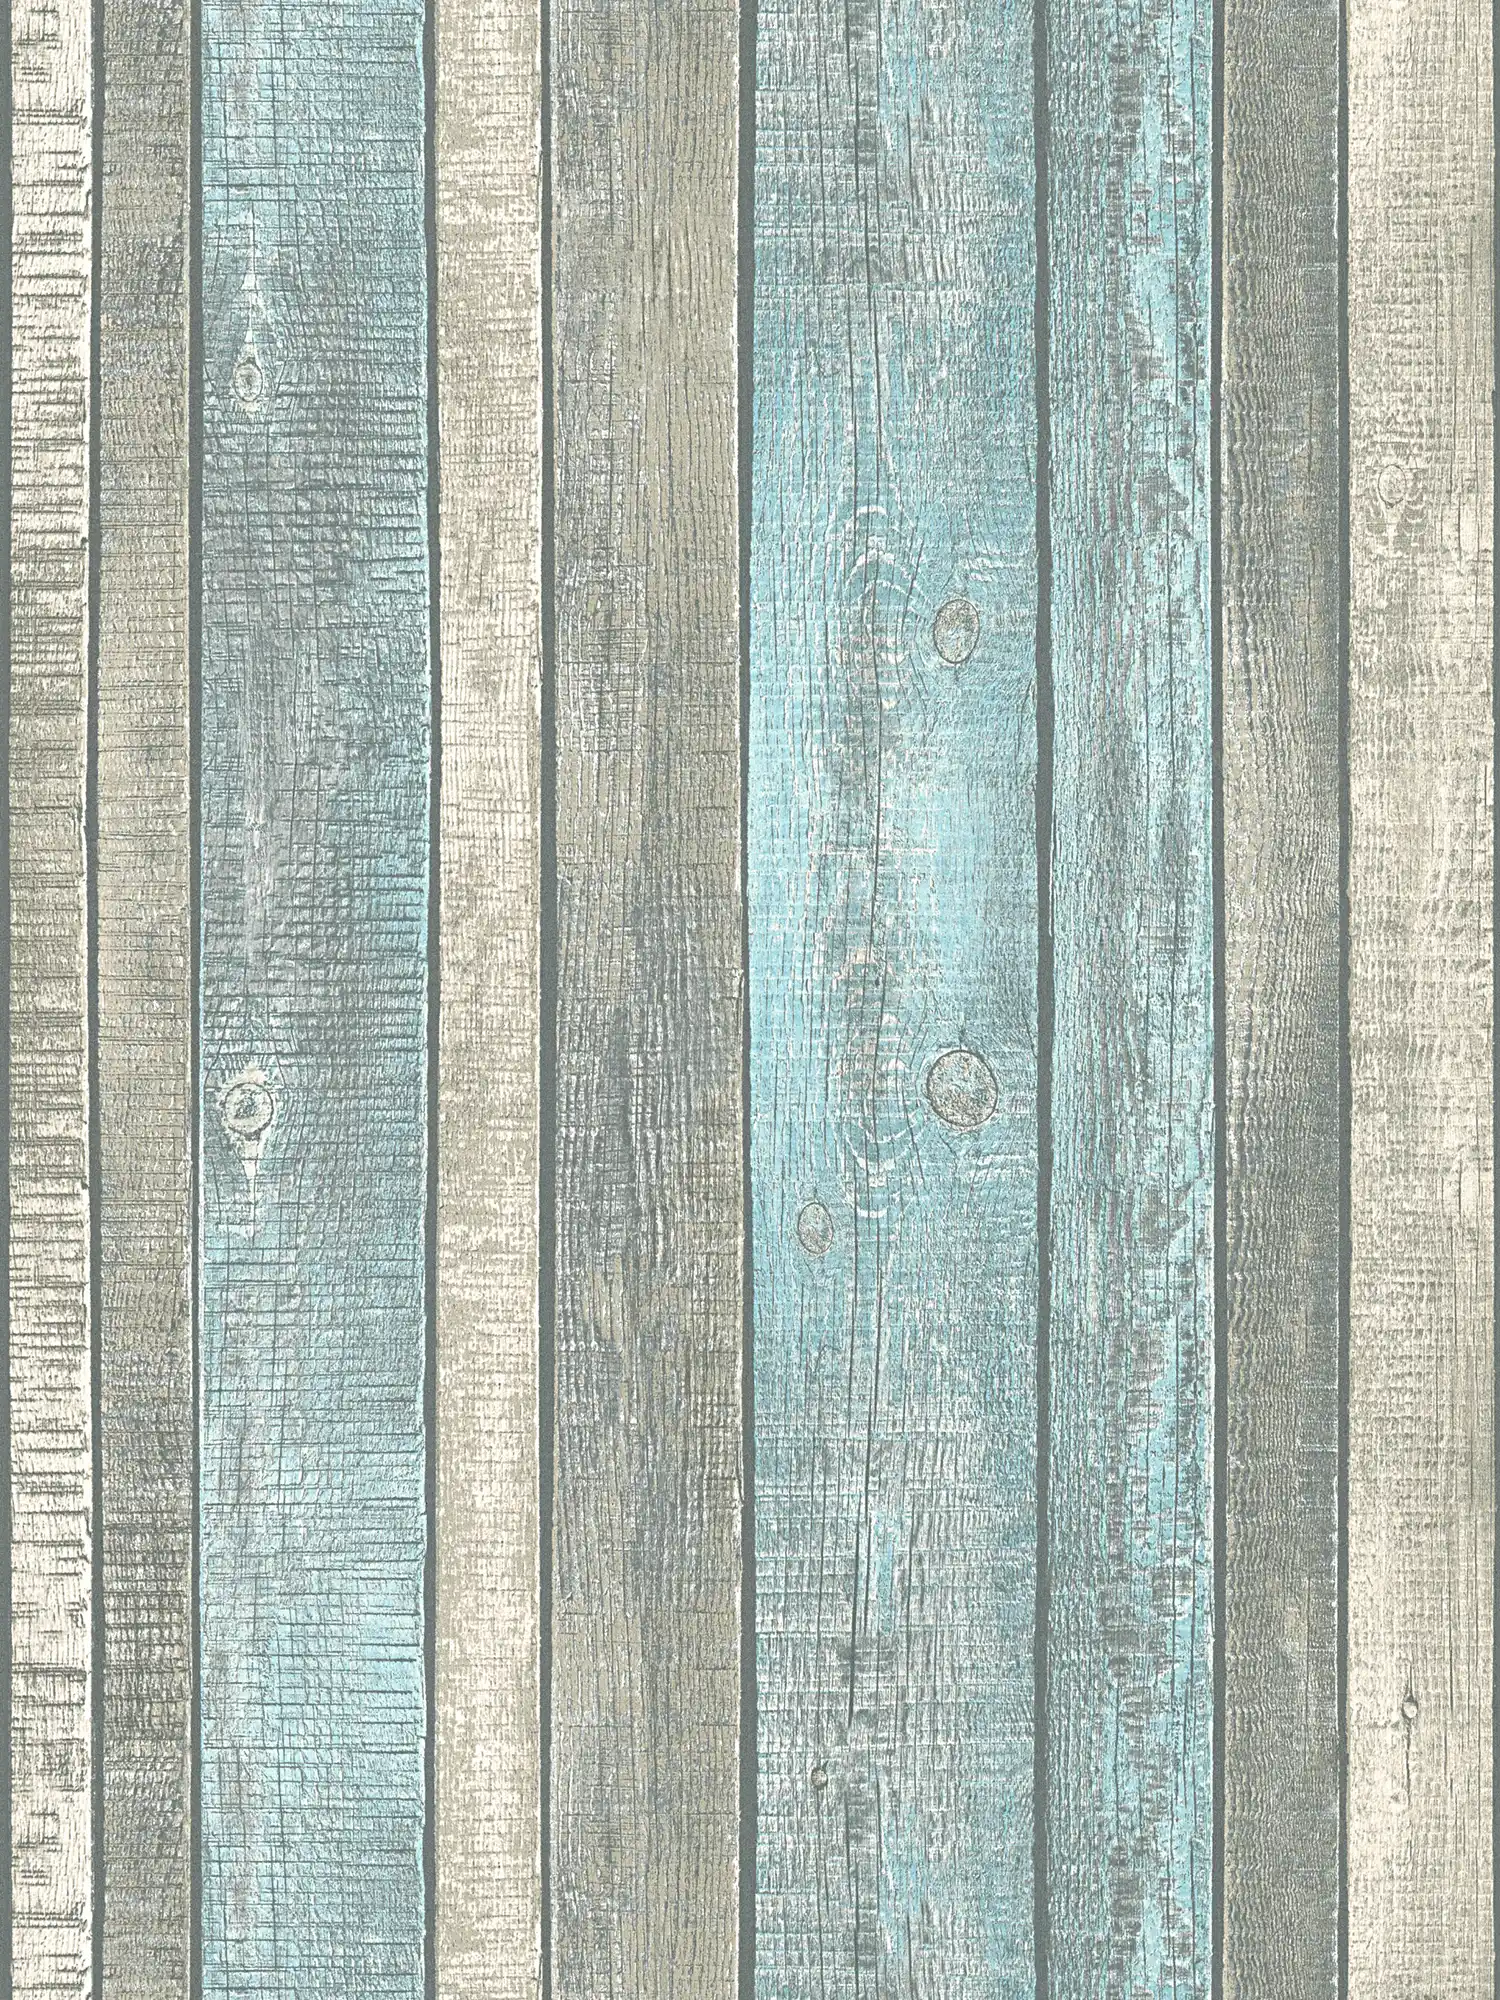 Wood look wallpaper with boards & rustic grain - blue, grey, cream
